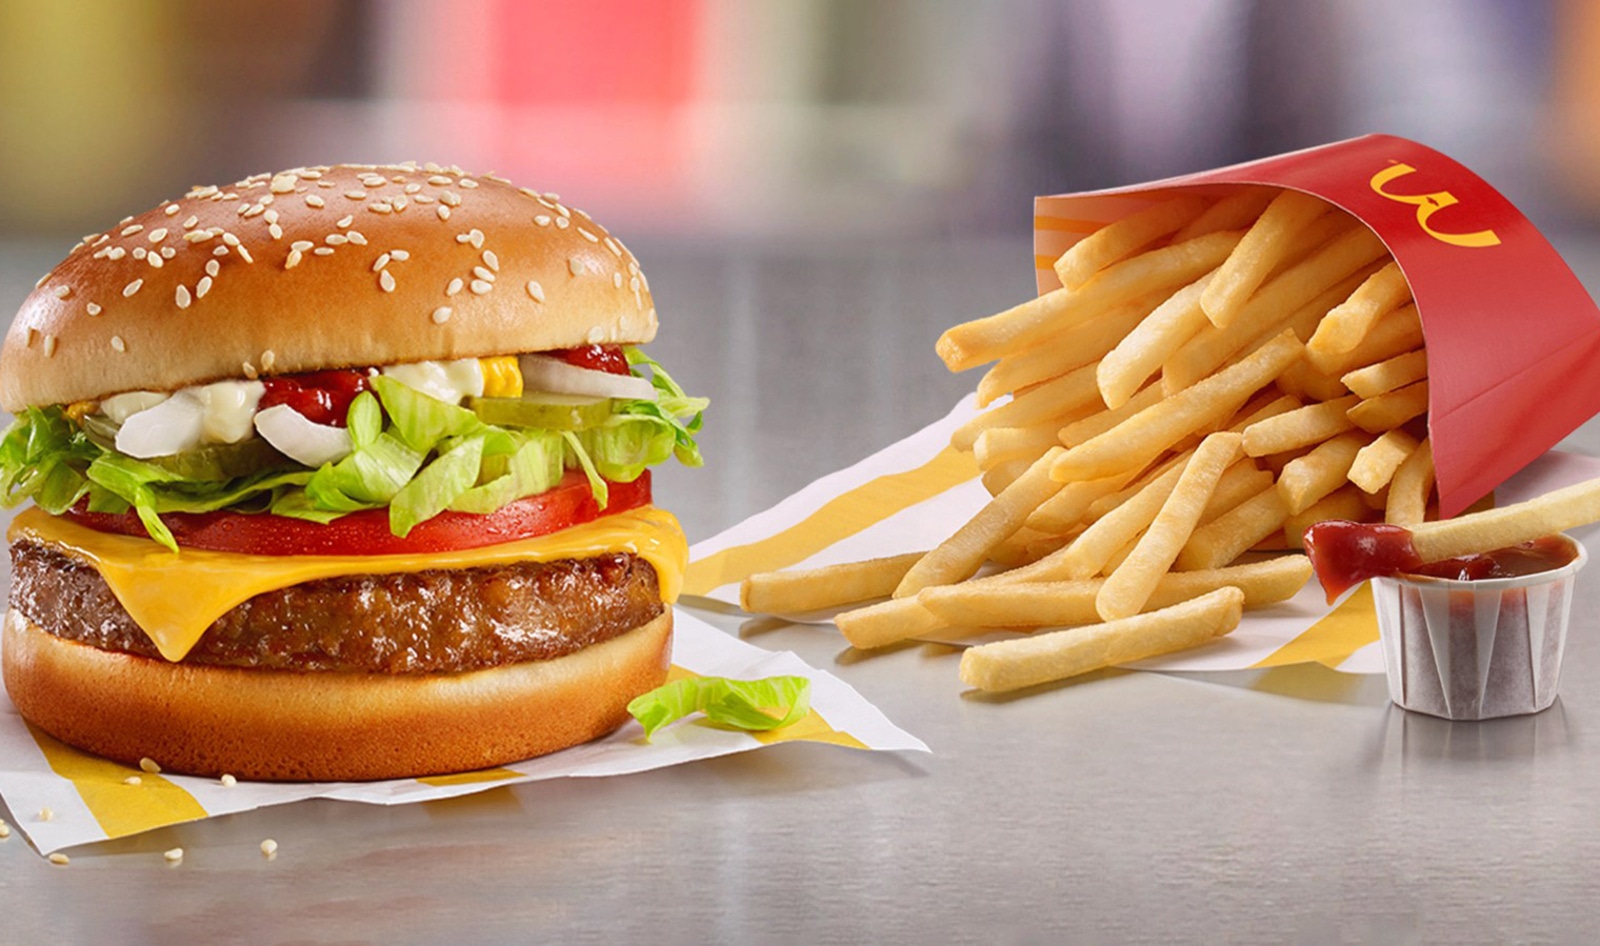 McDonald’s Launches Its Vegan McPlant Burger in the UK